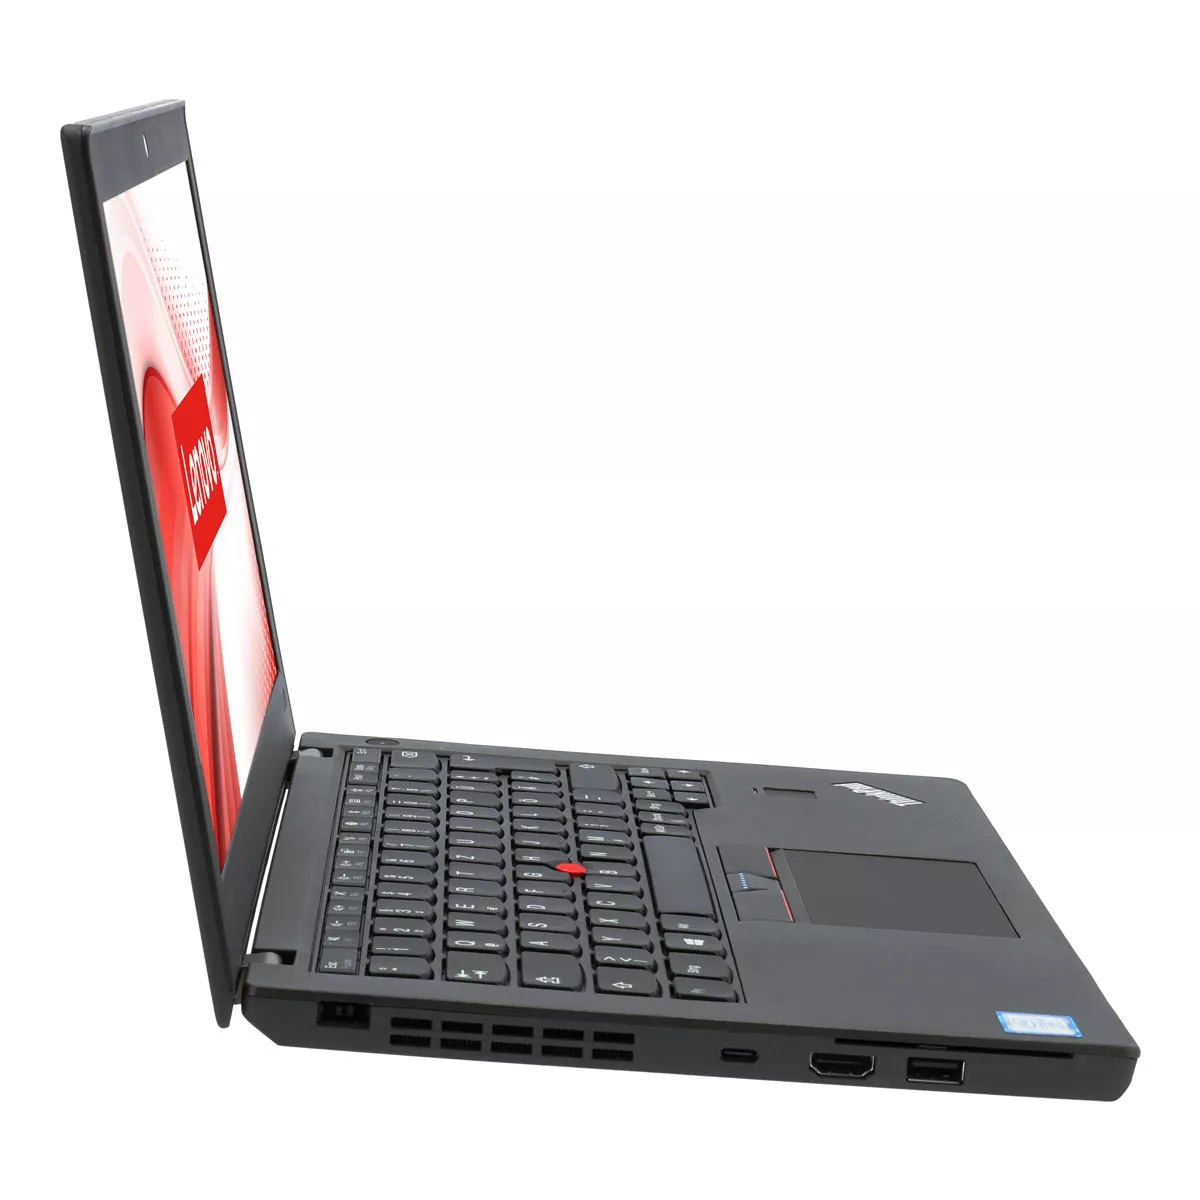 Lenovo ThinkPad X270 Core i5 6300U Full-HD 240 GB NVMe SSD Webcam A